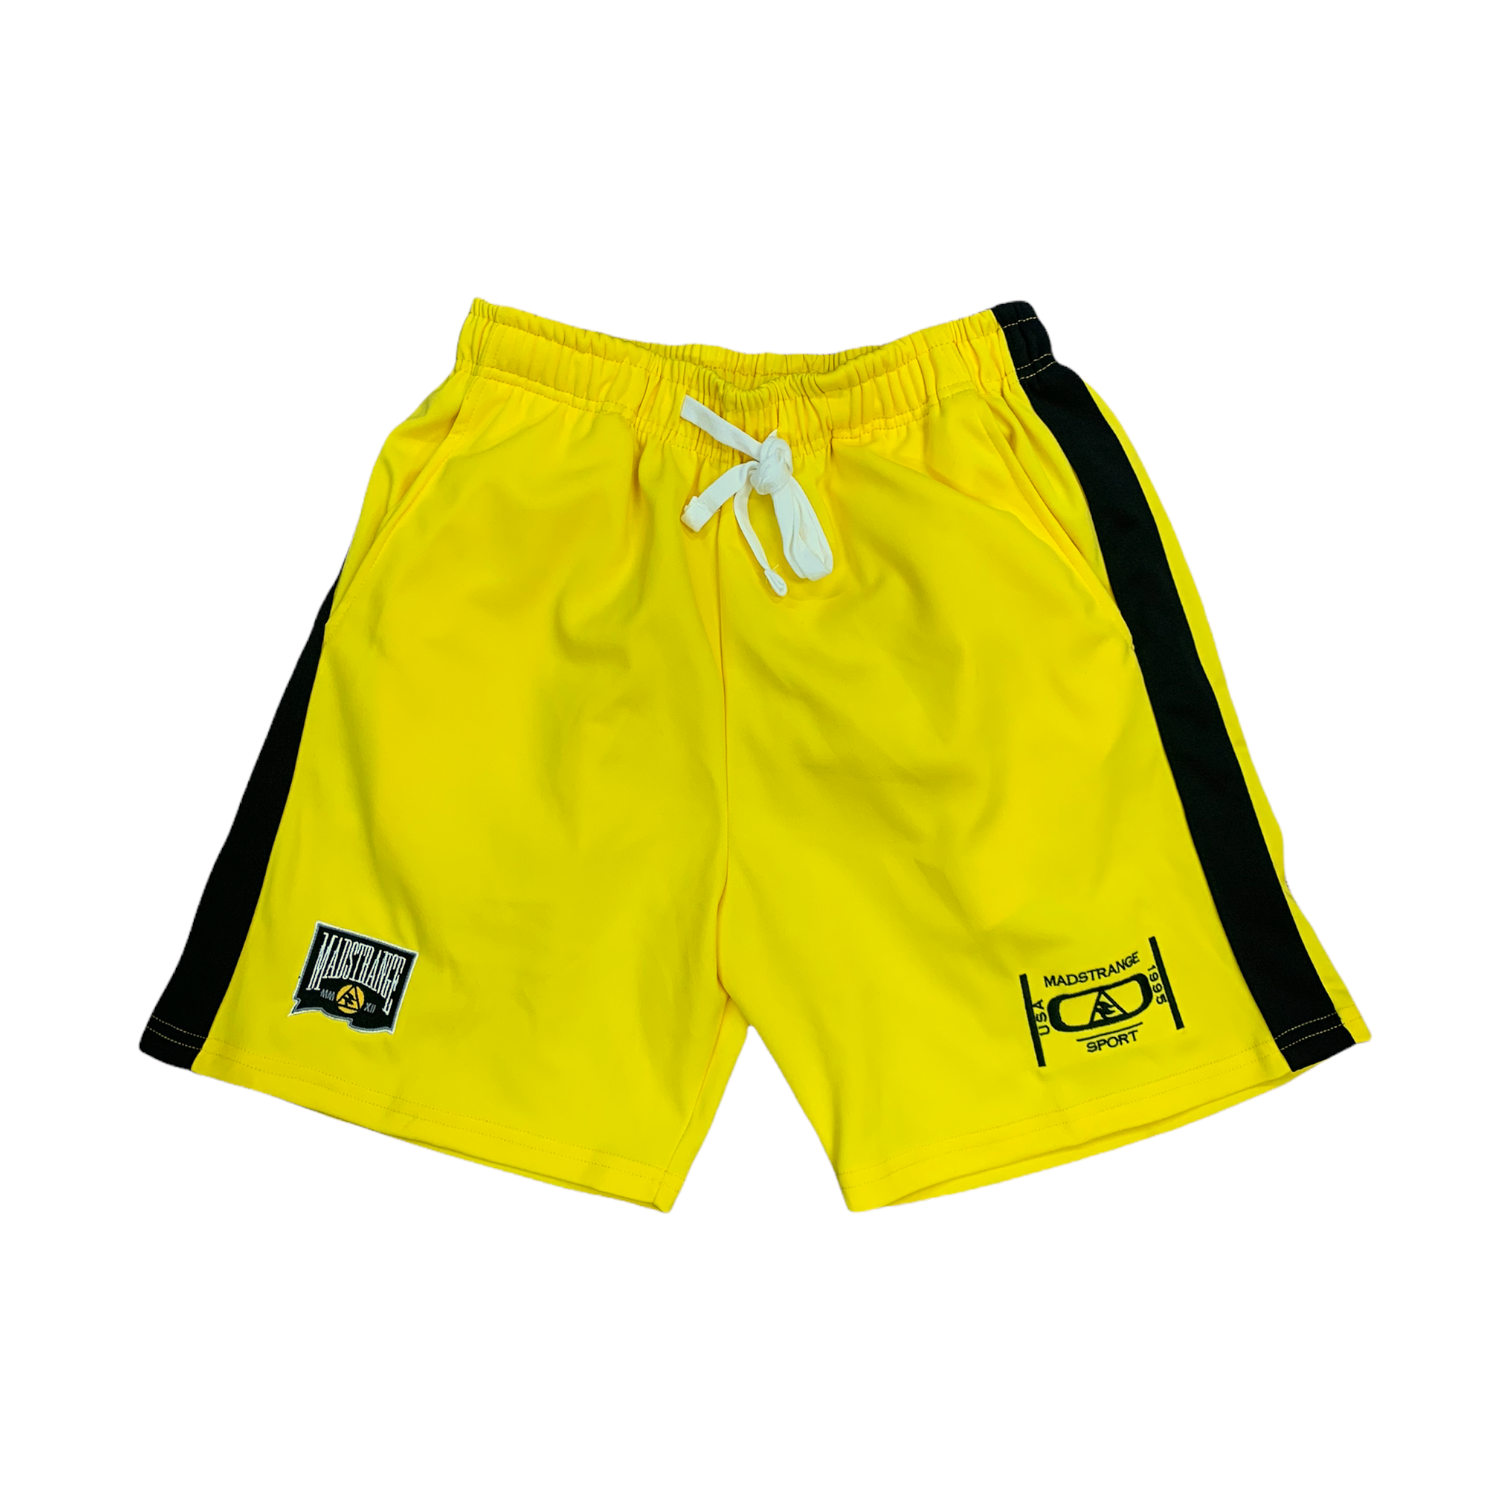 MadStrange Shorts (Yellow)